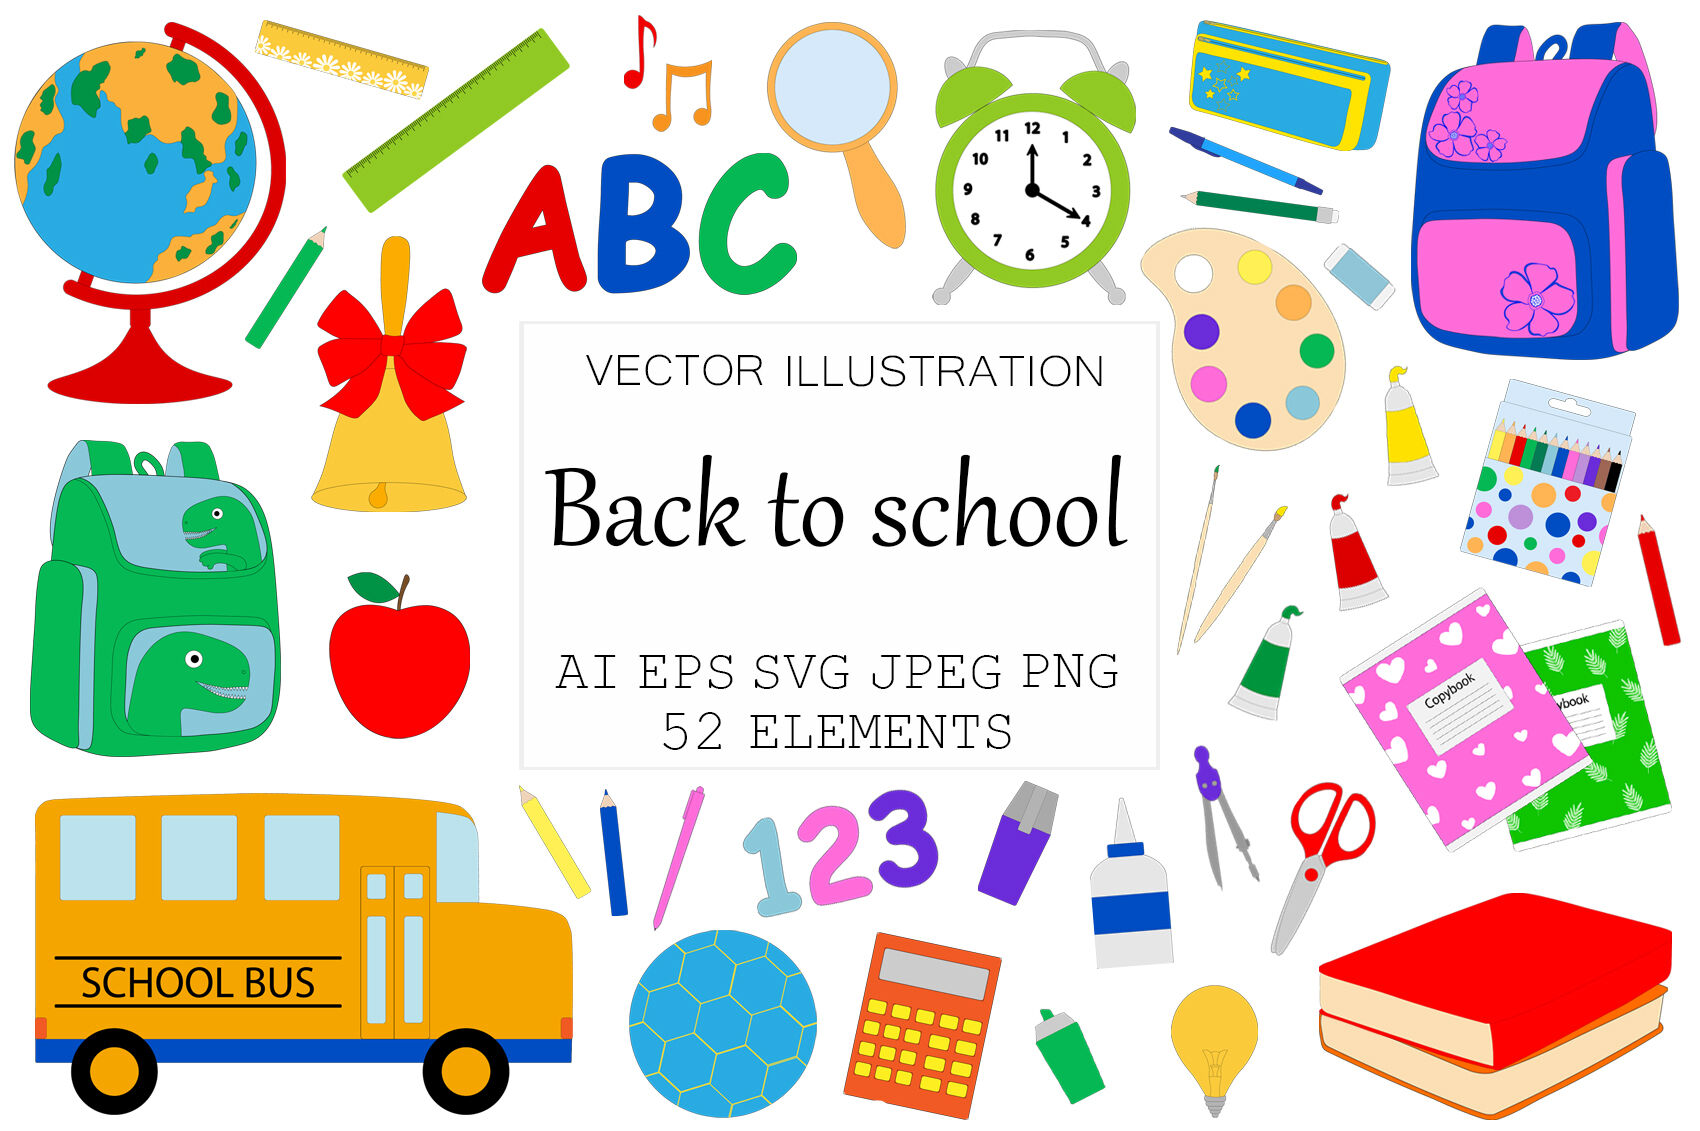 Back To School Sign Clipart - Download in Illustrator, EPS, SVG